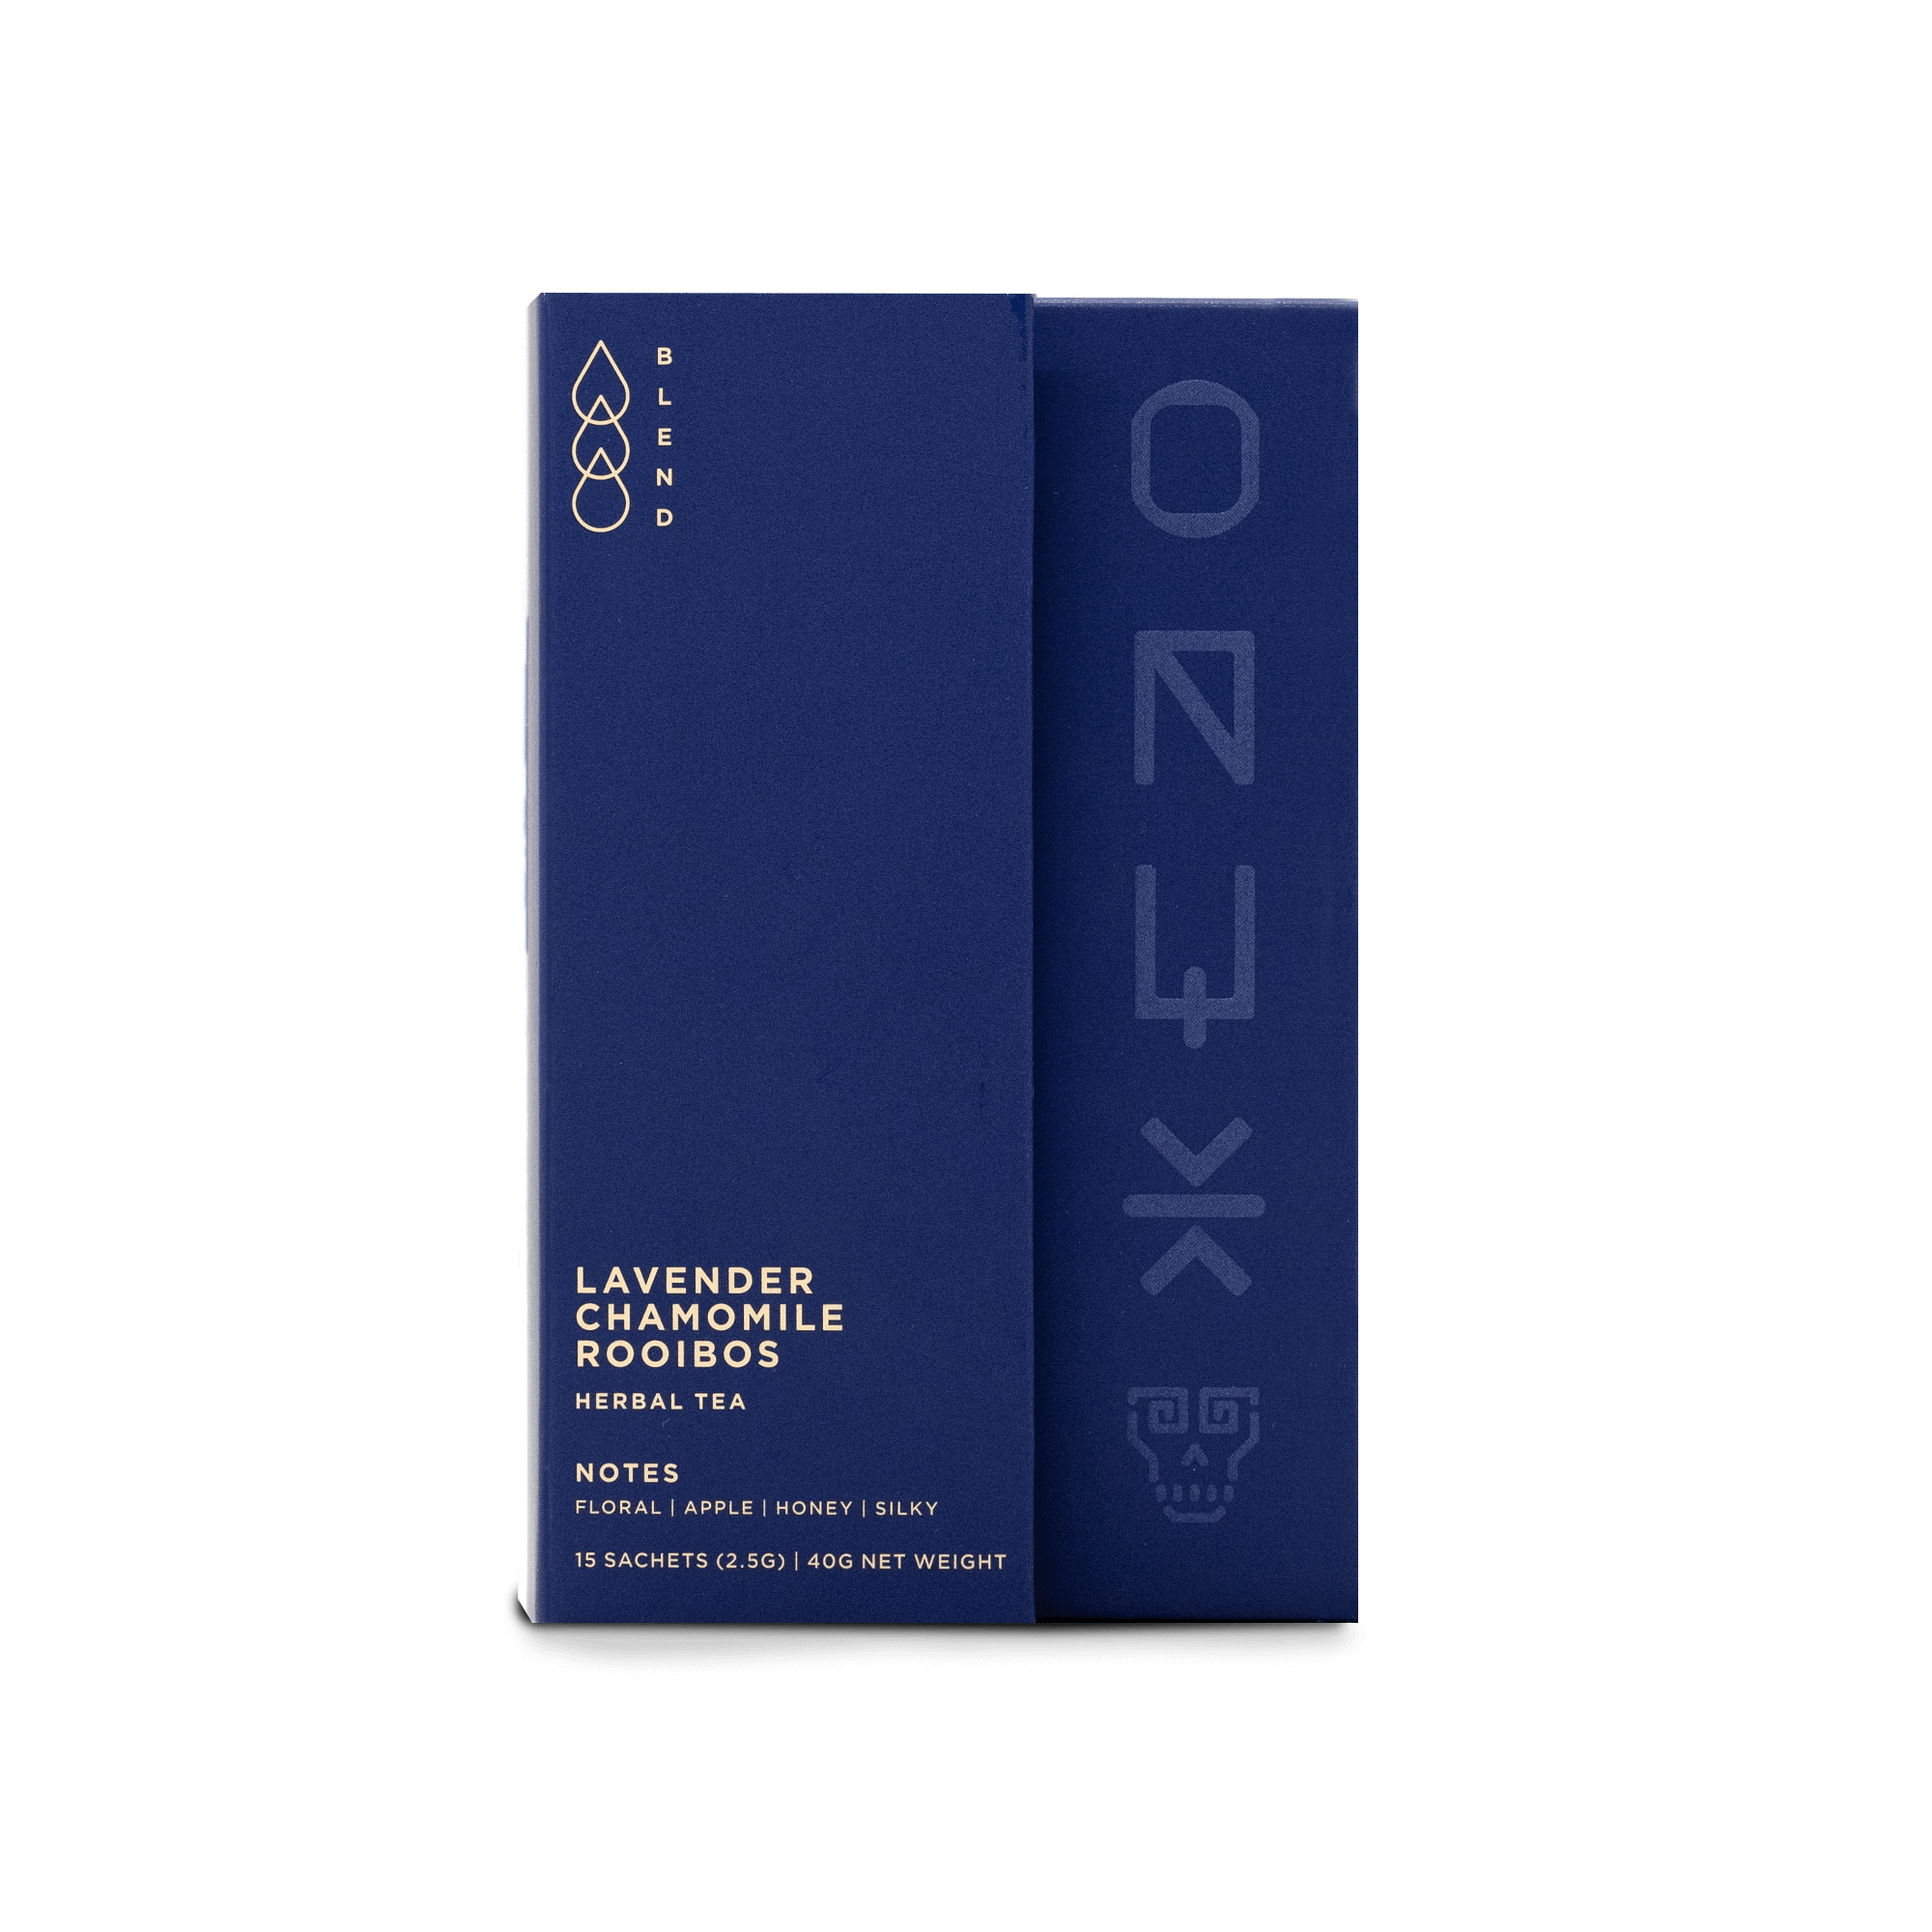 Onyx Coffee Lab - Branding on Behance